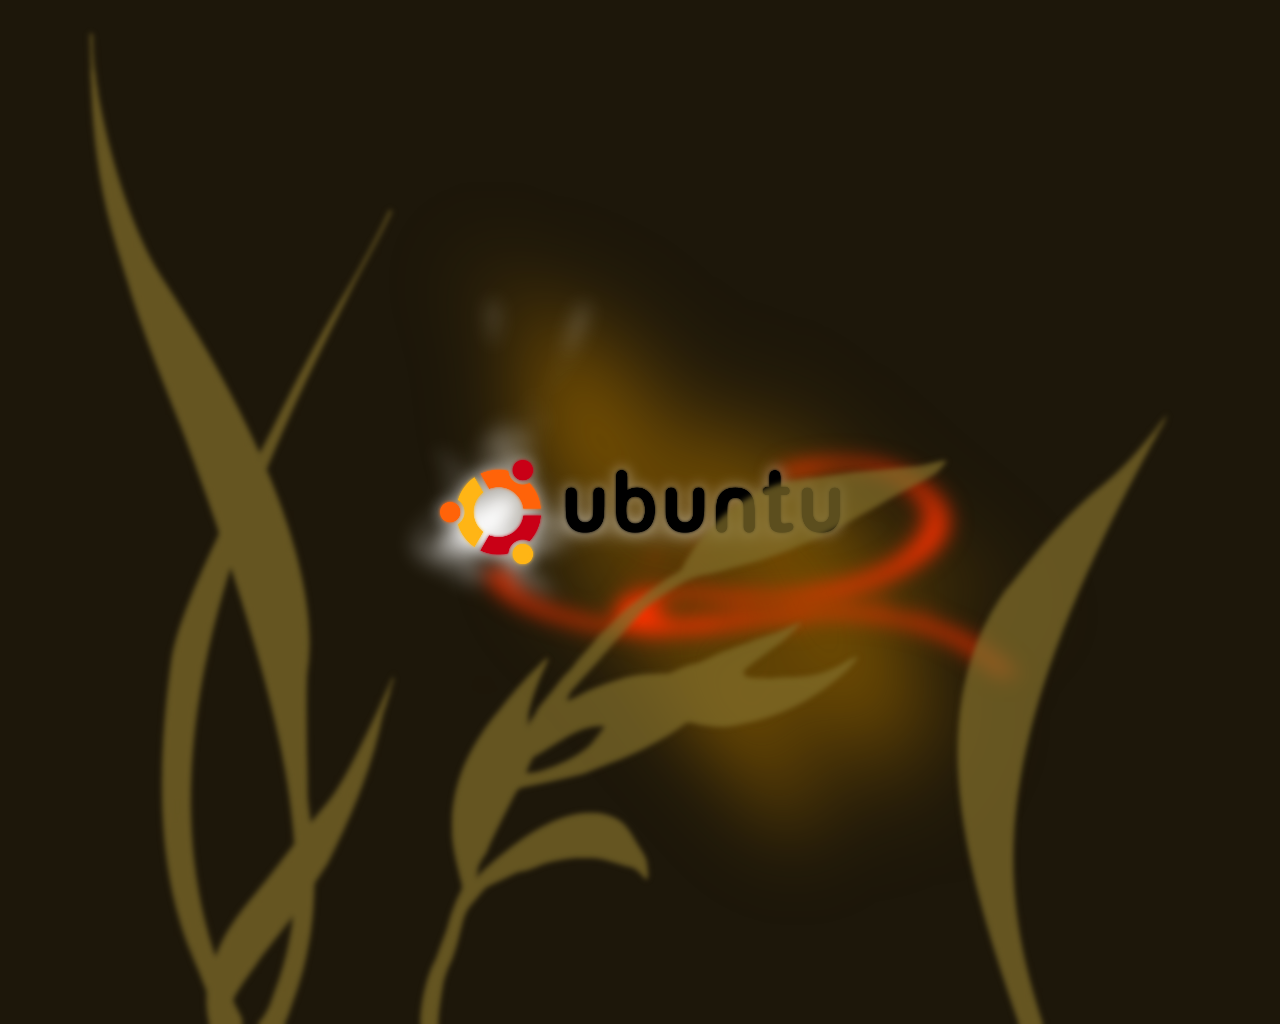 New Ubuntu wallpaper for everyone - Picwall